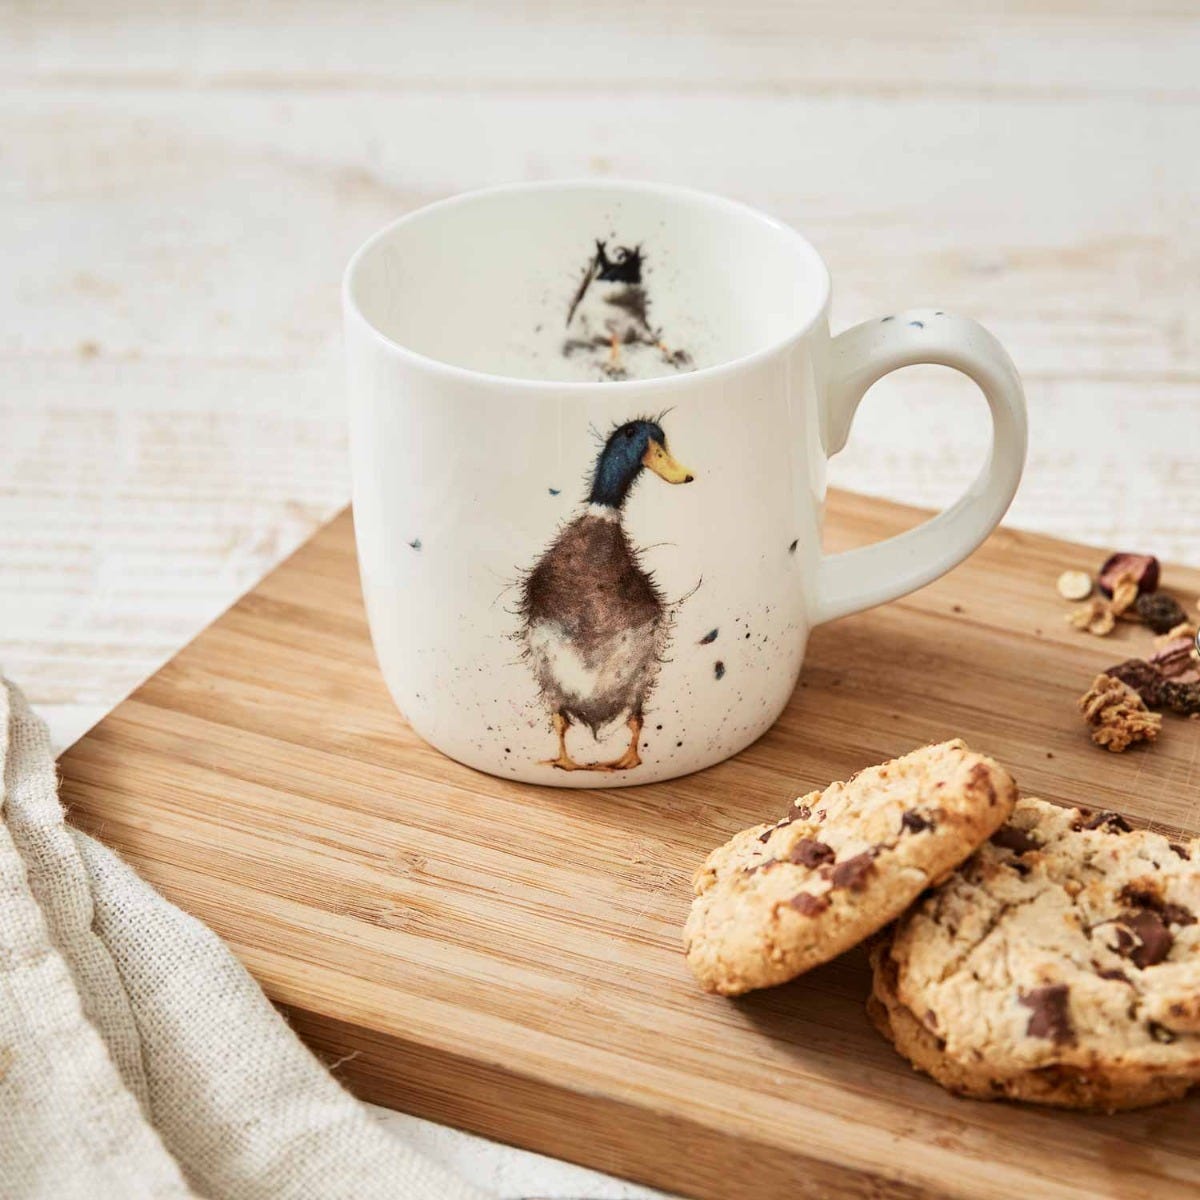 Wrendale Designs Guard Duck Personalised Mug